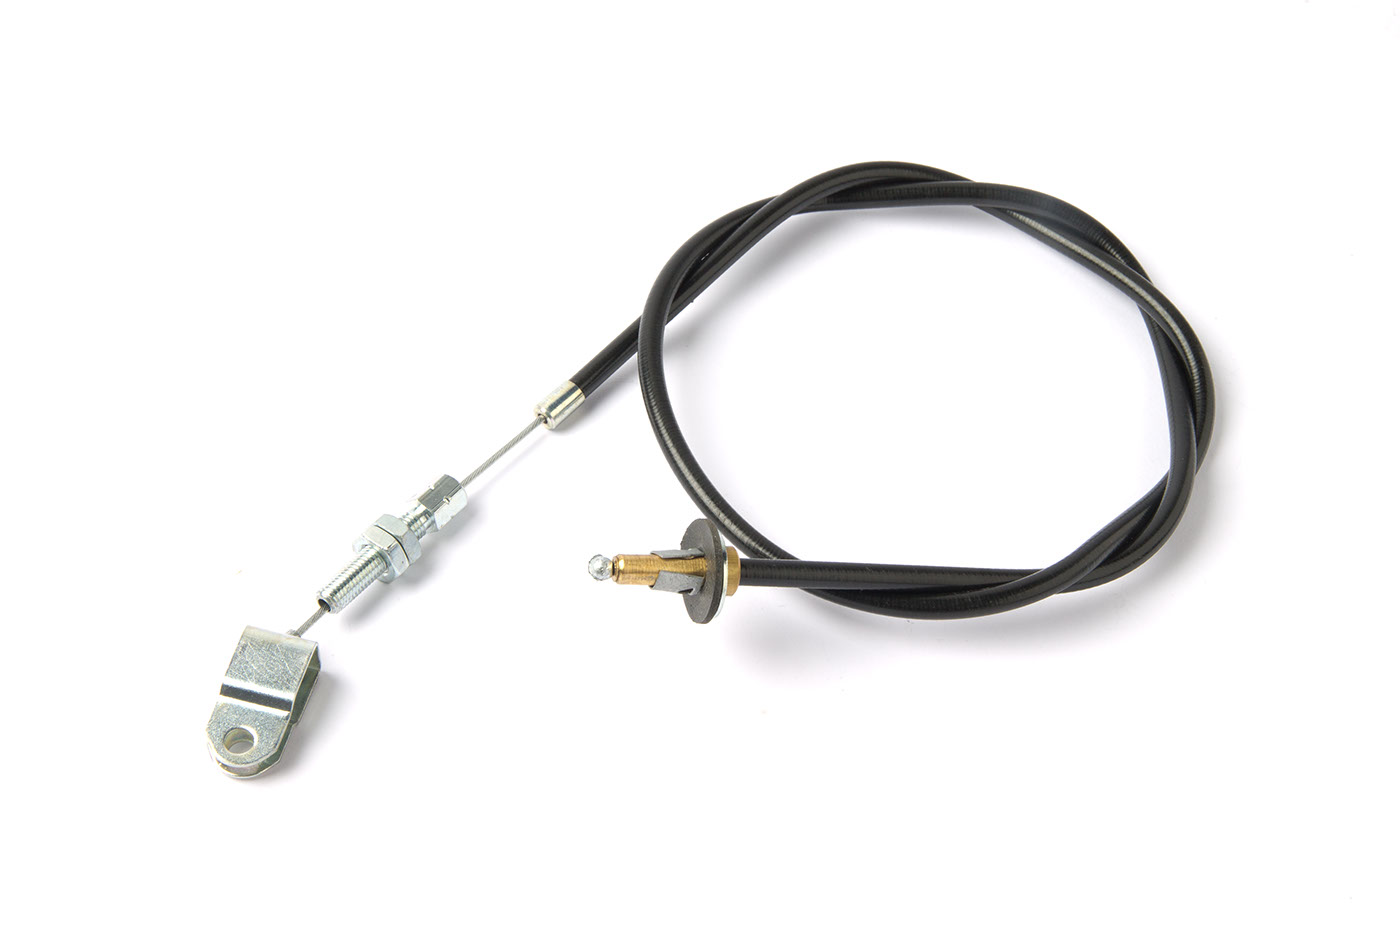 Gaszug
Accelerator cable
Câble d'accélérateur